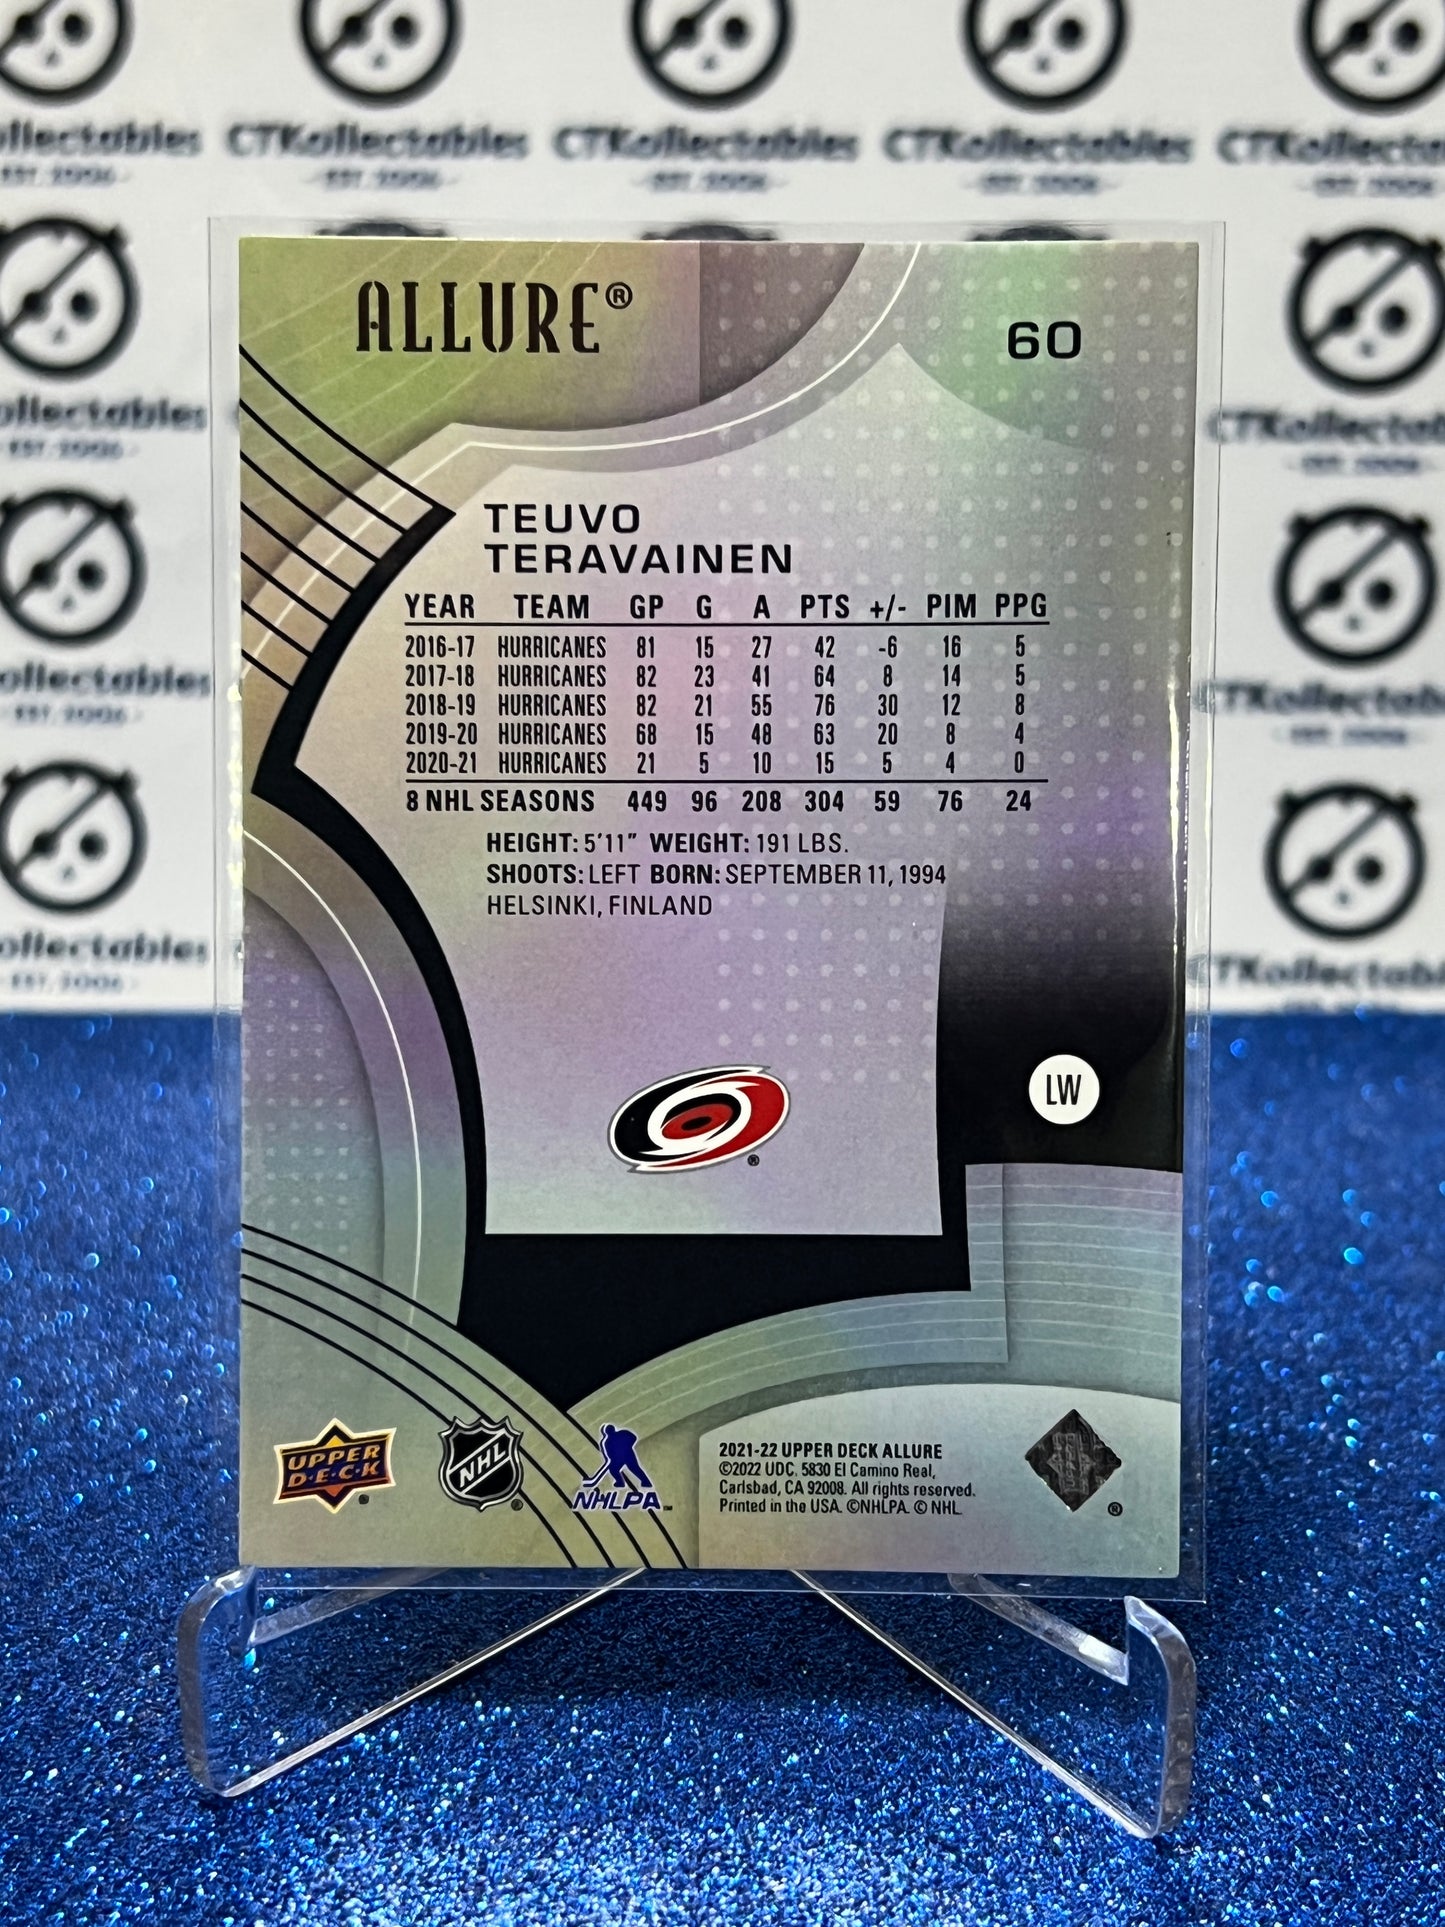 2021-22 UPPER DECK ALLURE TEUVO TERAVAINEN # 60 CAROLINA HURRICANES NHL HOCKEY TRADING CARD